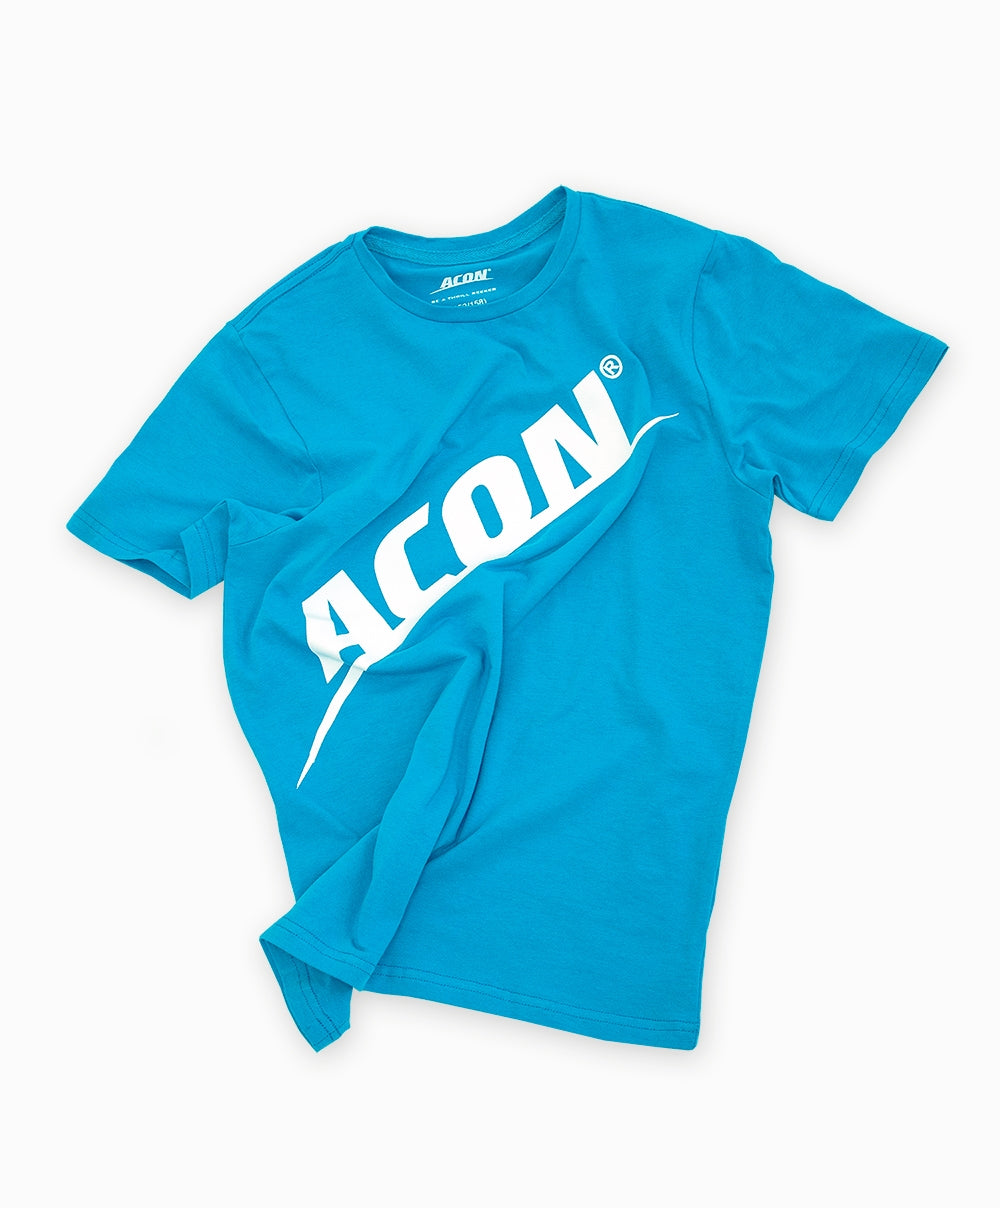 Acon T-shirt Blue